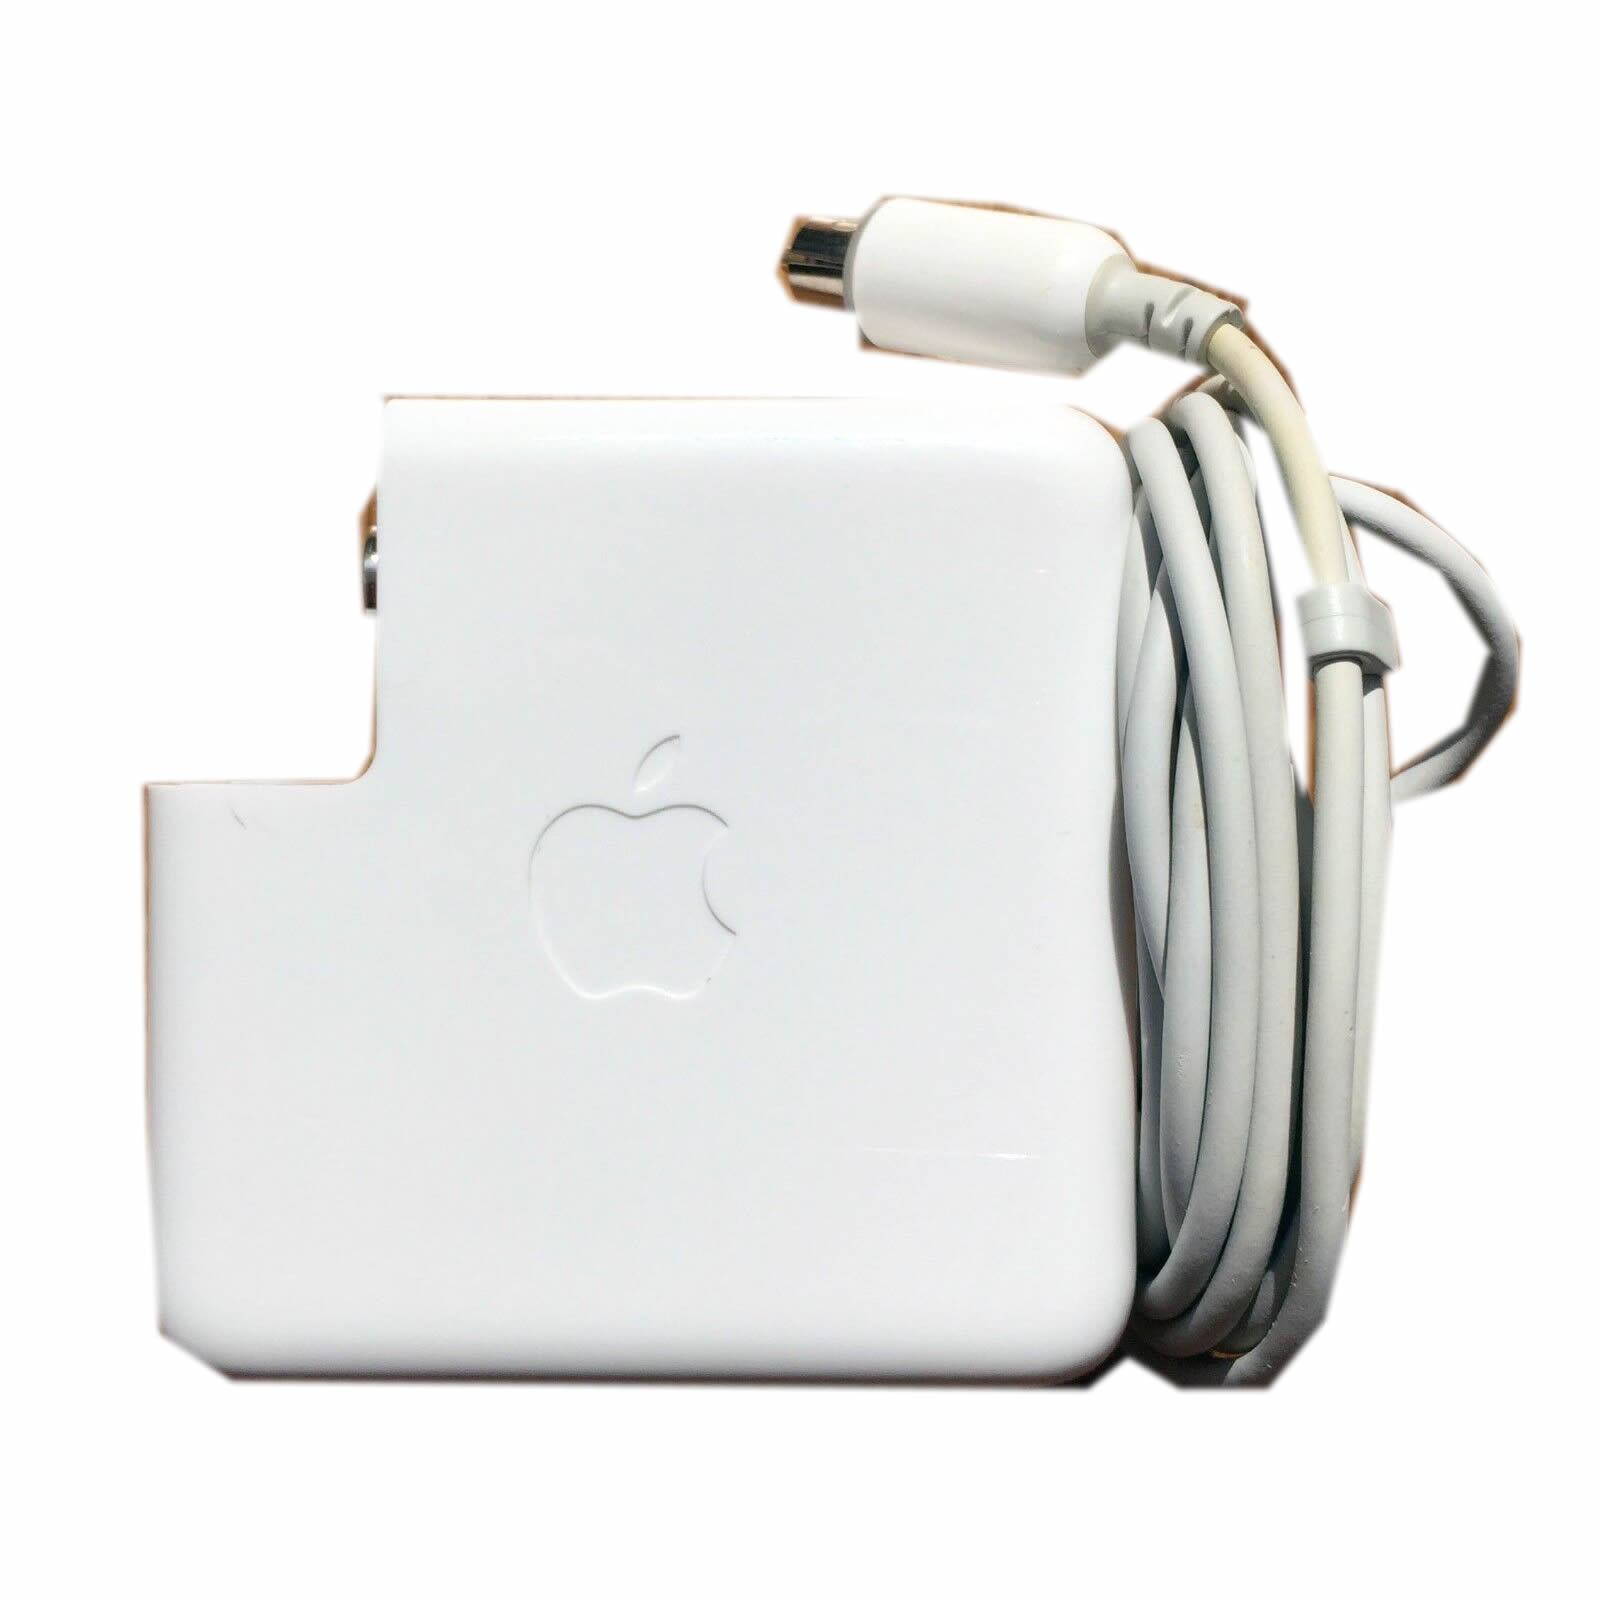 apple powerbook g4 fw800 m9110ll/a laptop ac adapter